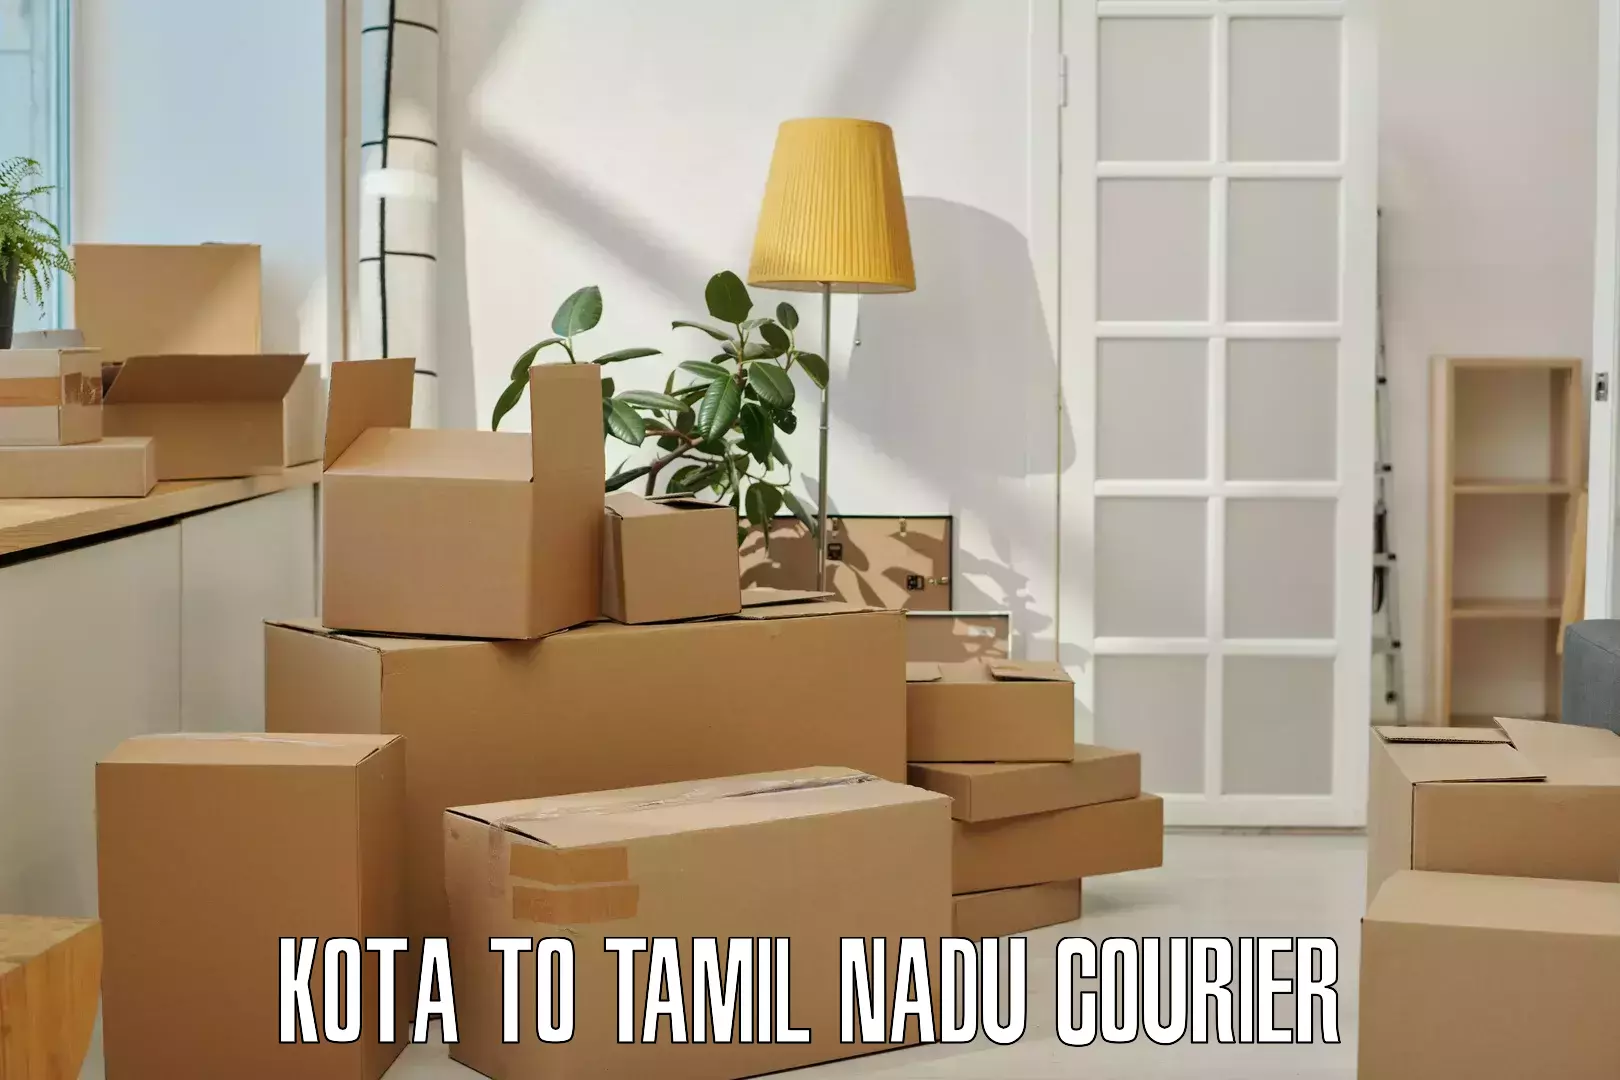 Local delivery service Kota to Tamil Nadu